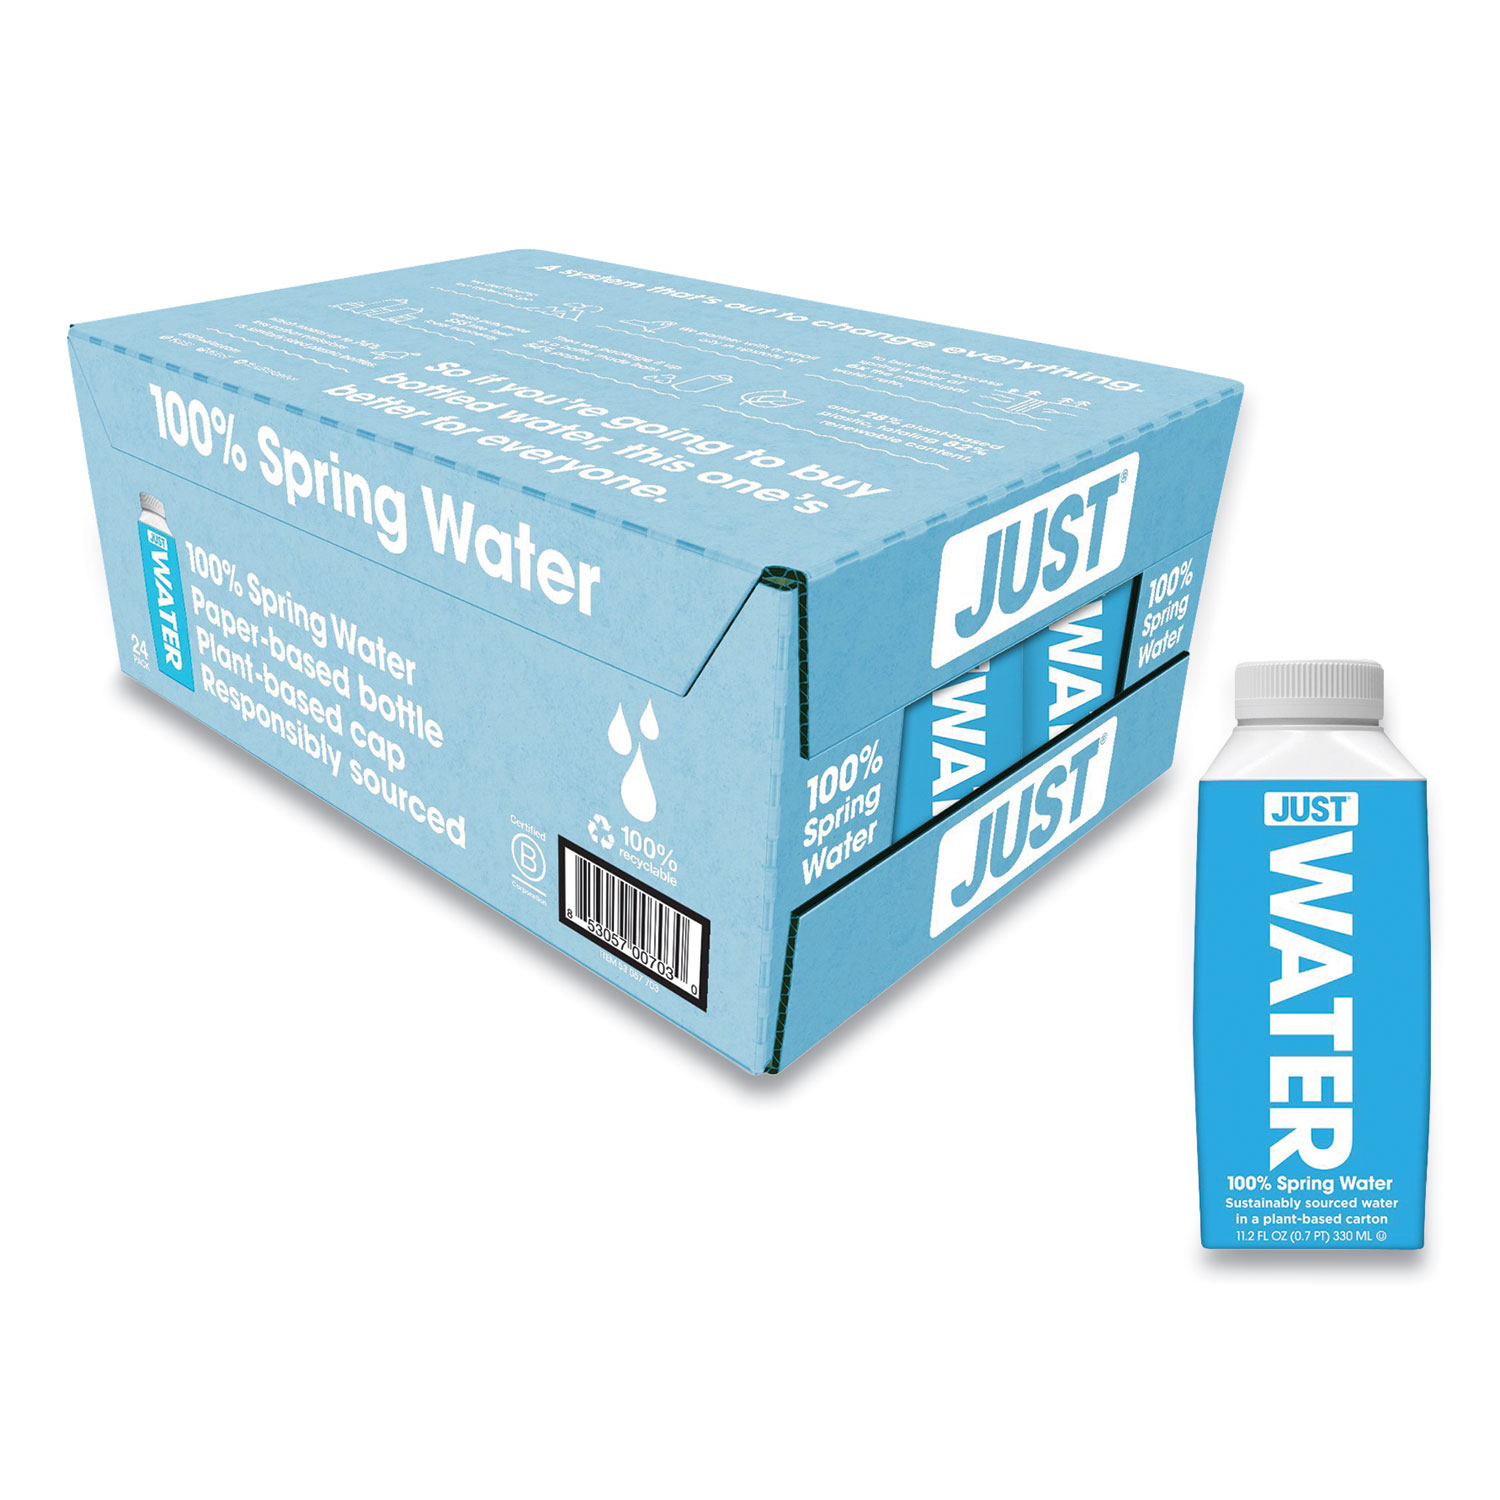  Just Water JGD00703 Spring Water, 11.2 oz, 24/Carton (DEZ24424615) 